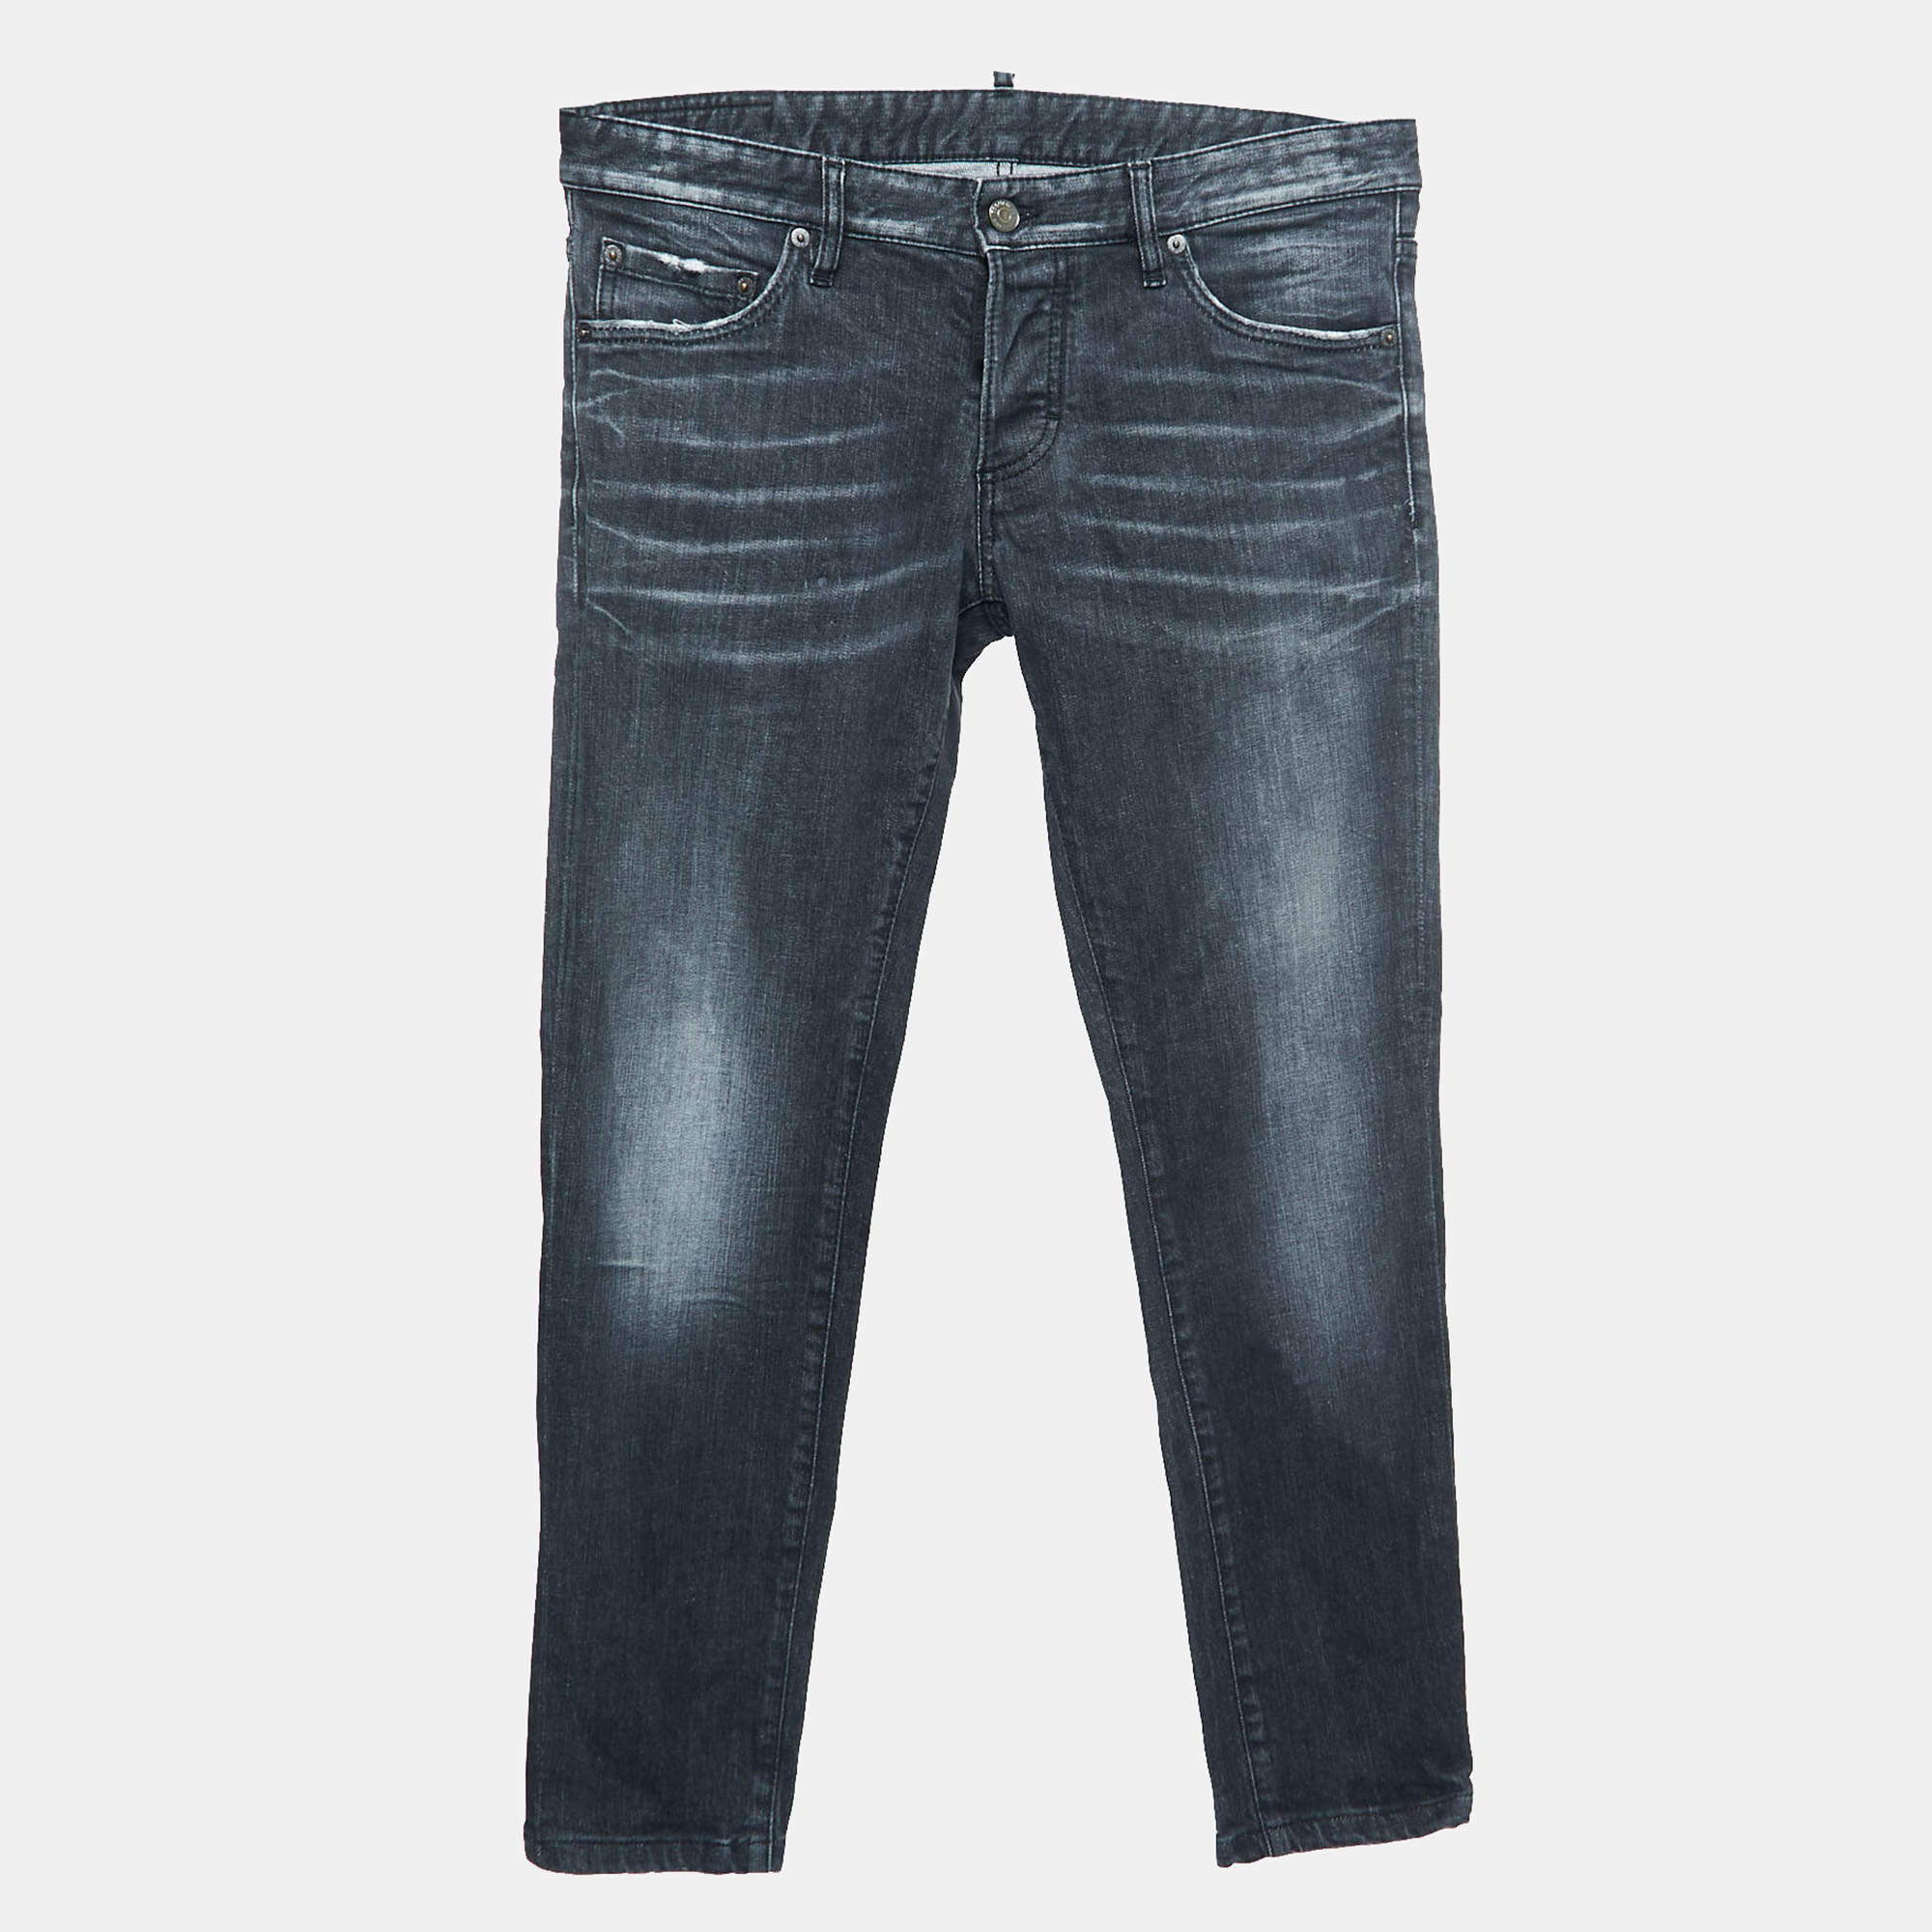 Dsquared2 Grey Distressed Denim Skinny Jeans M Waist 34